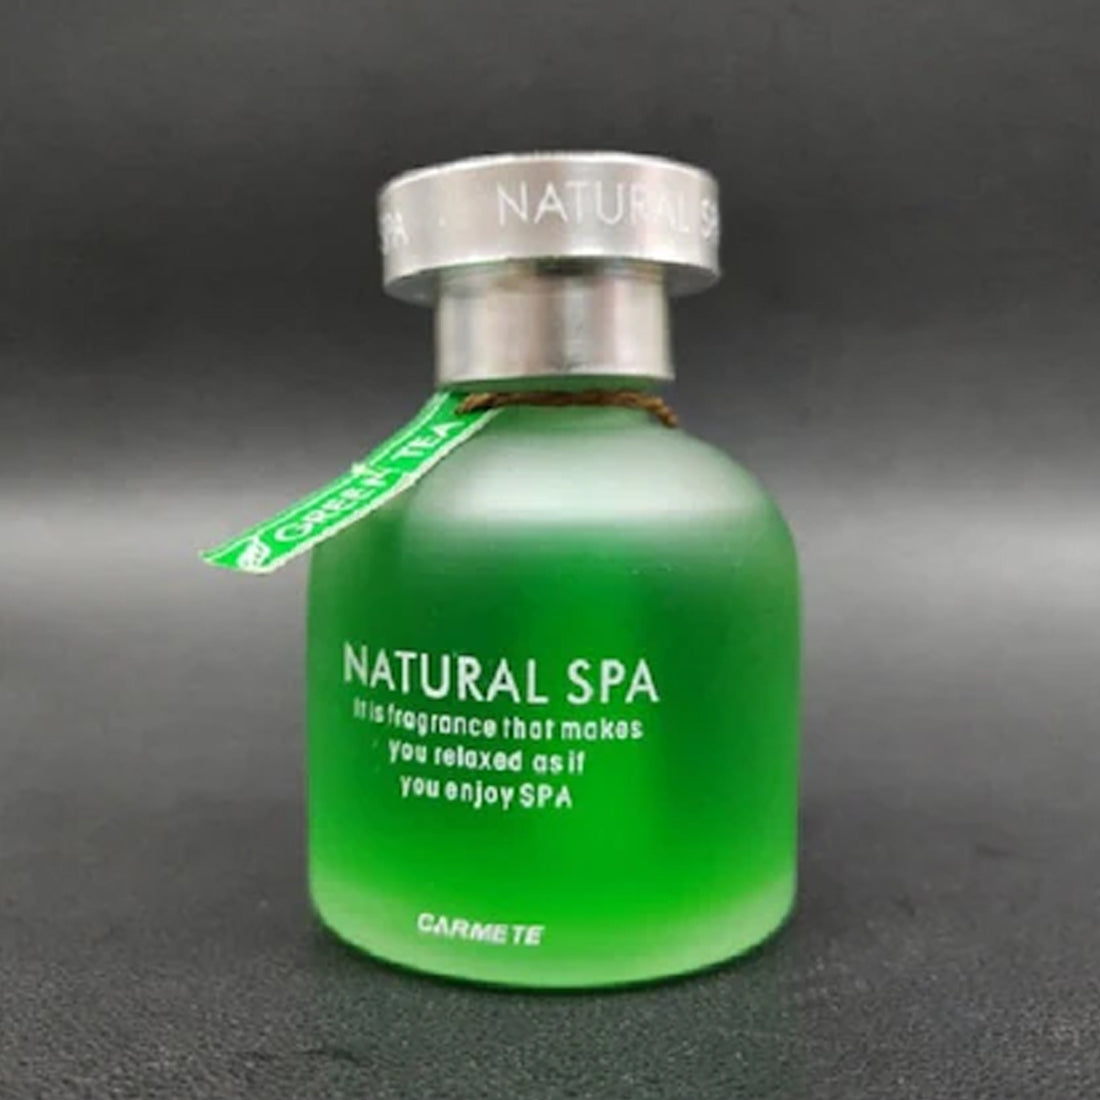 Natural Spa Car Freshener Perfume